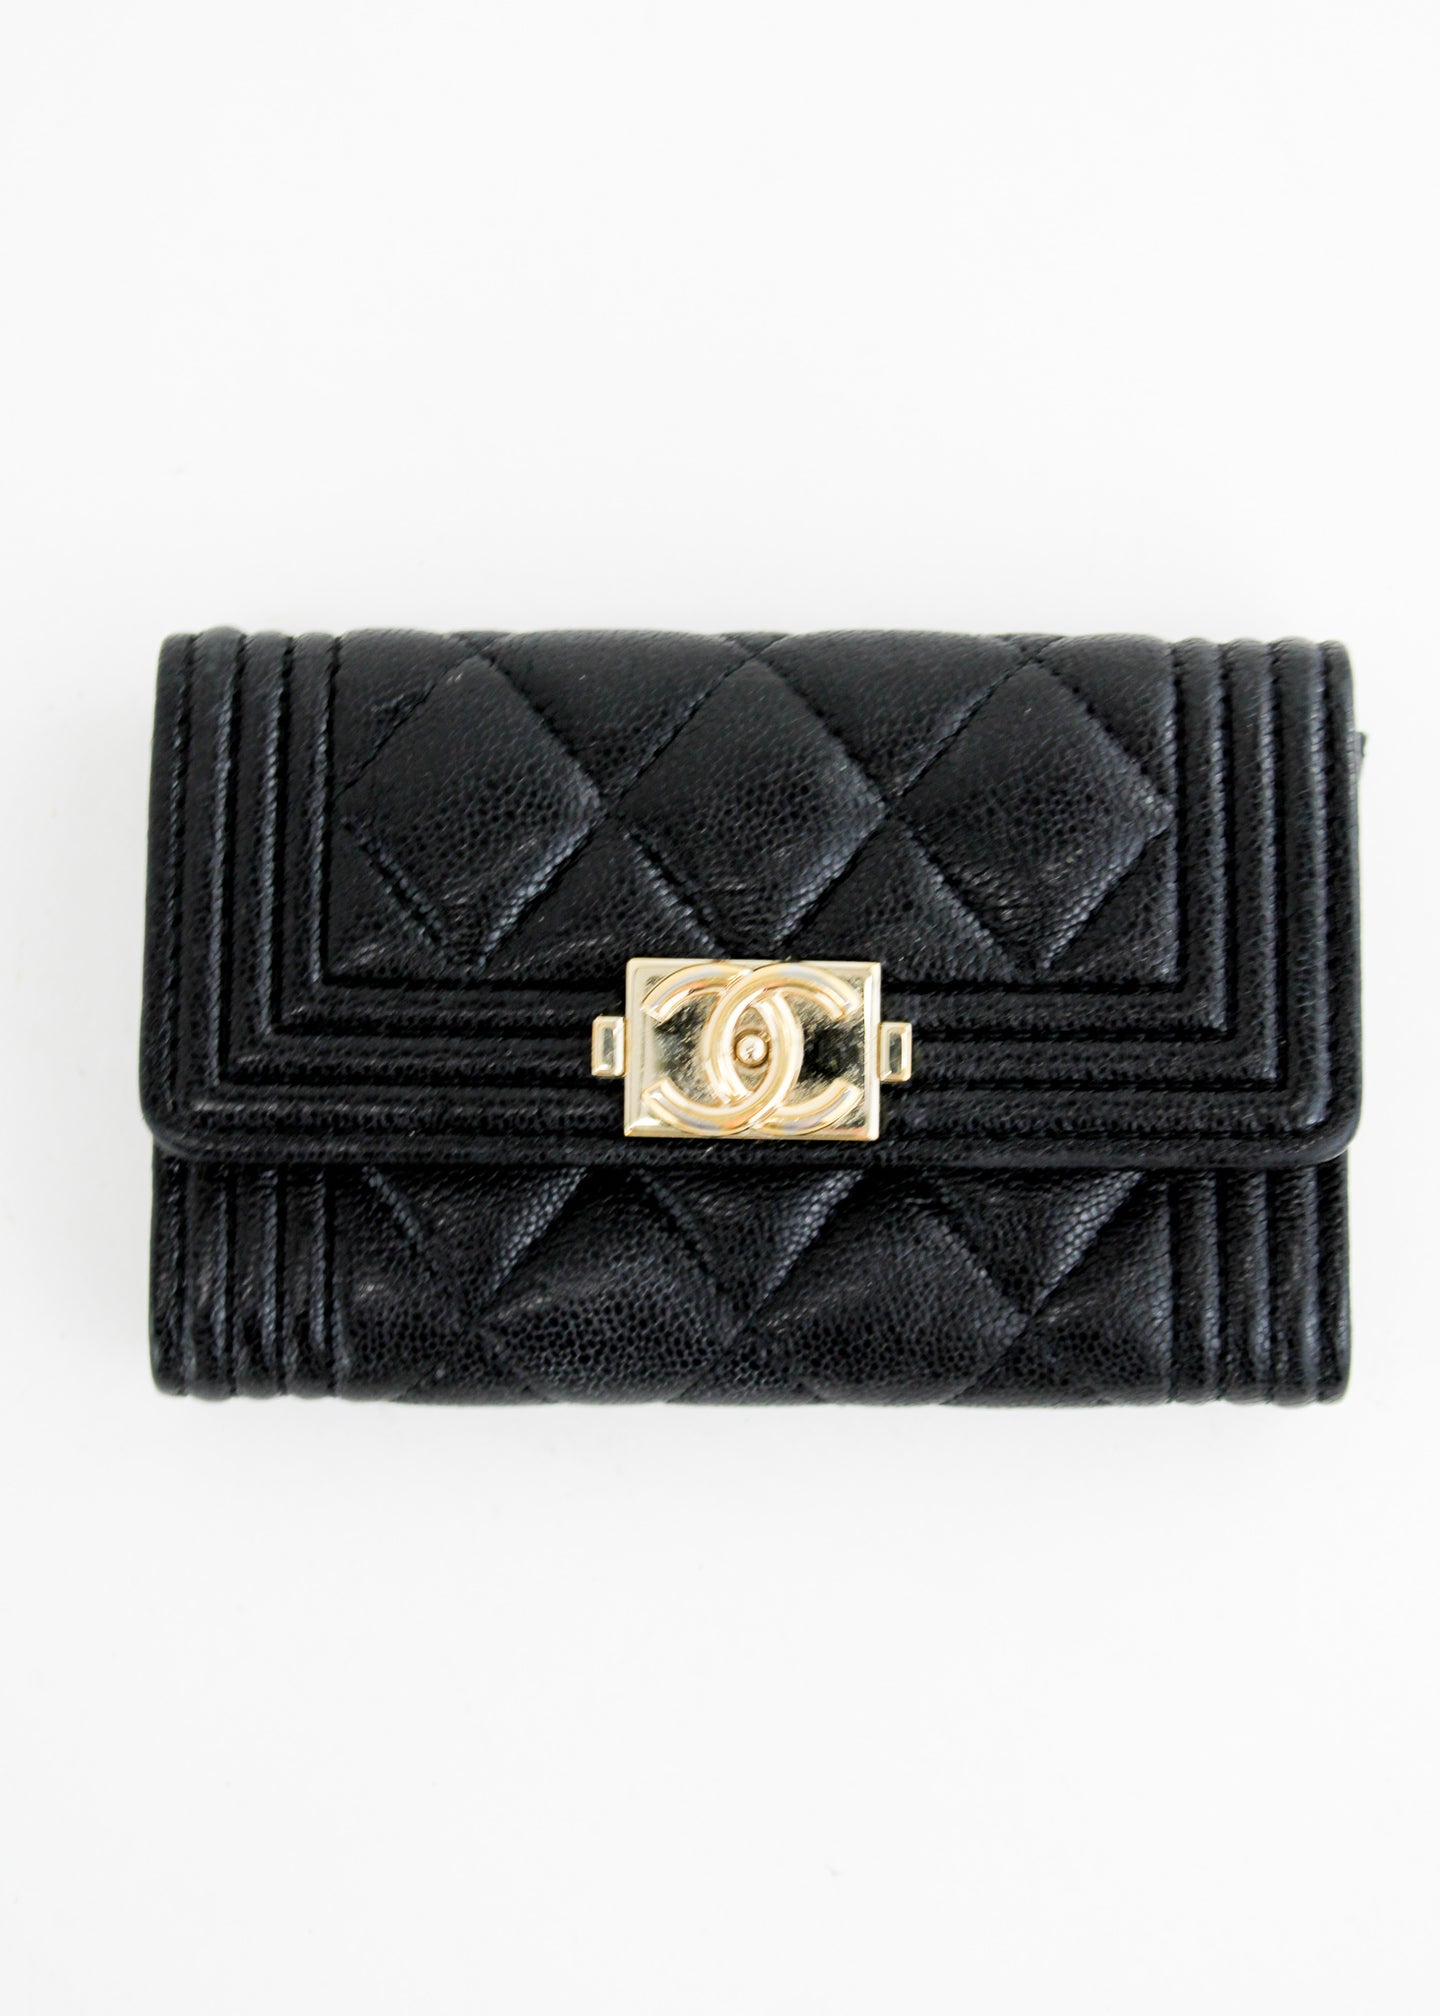 Chanel Compact Boy Wallet Black